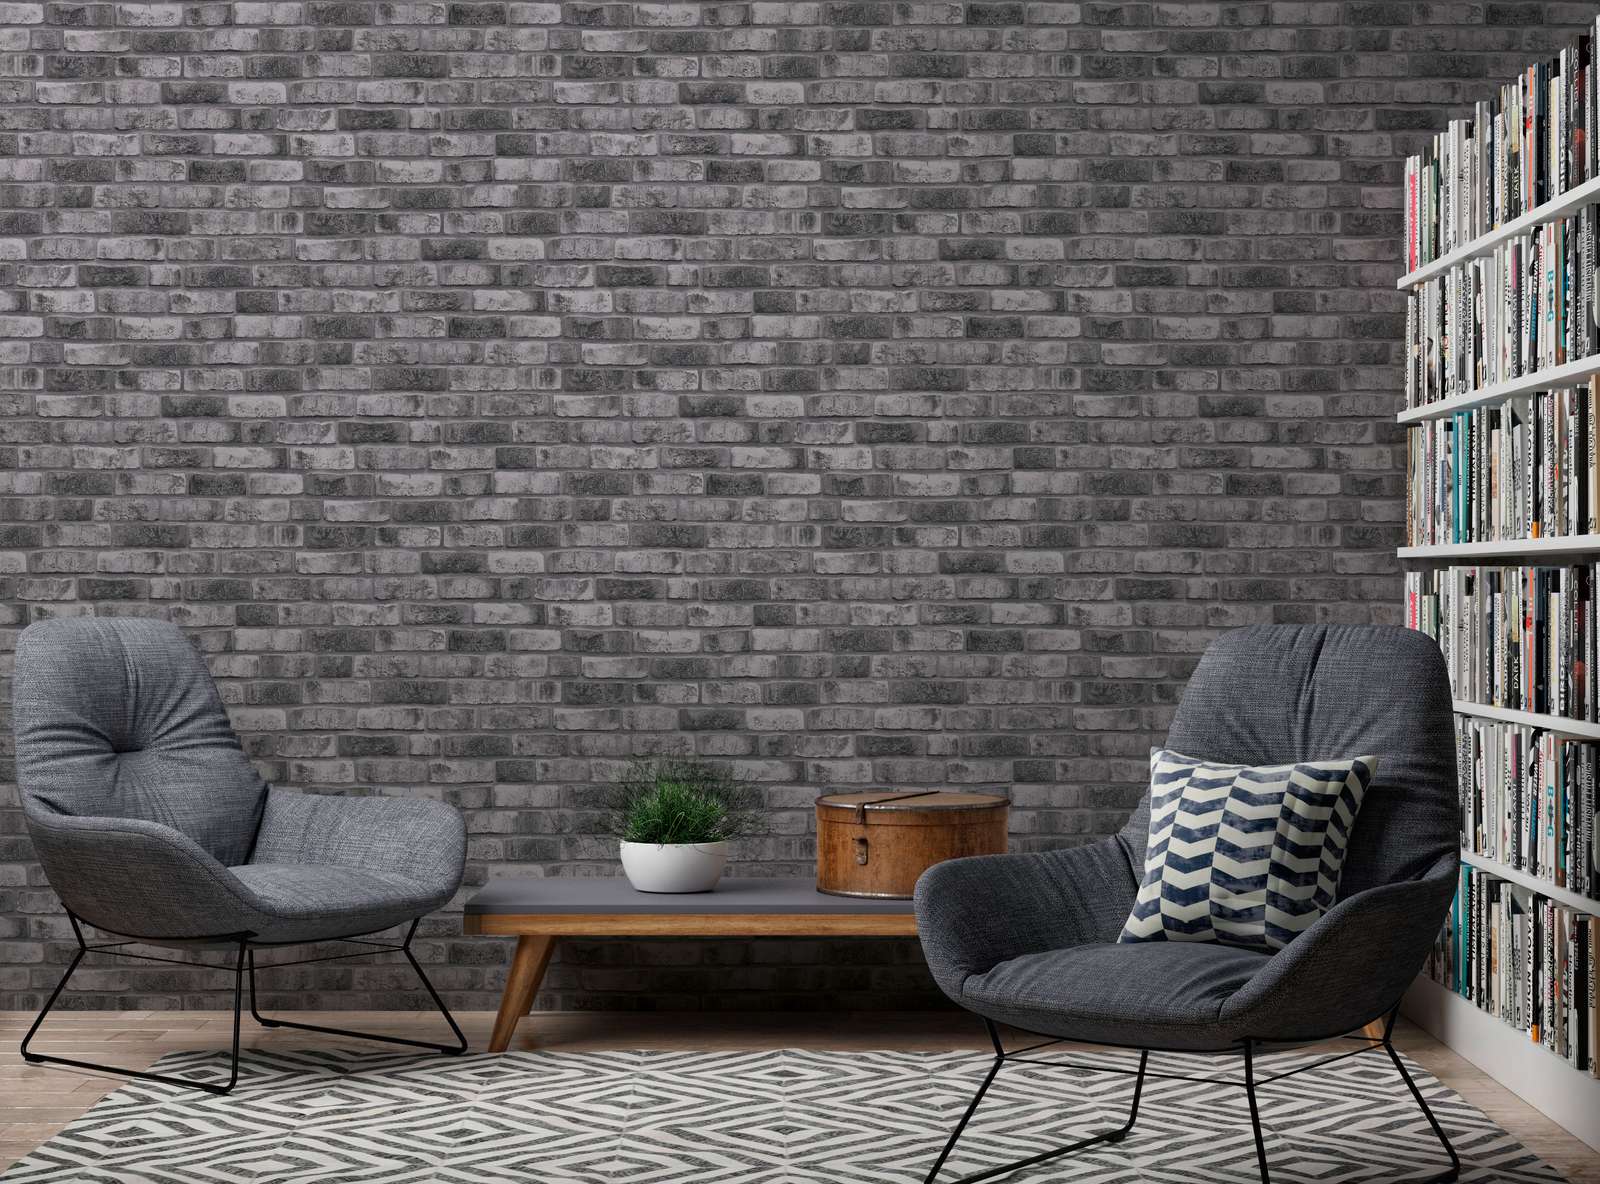             Wallpaper with brick motif in grey, black
        